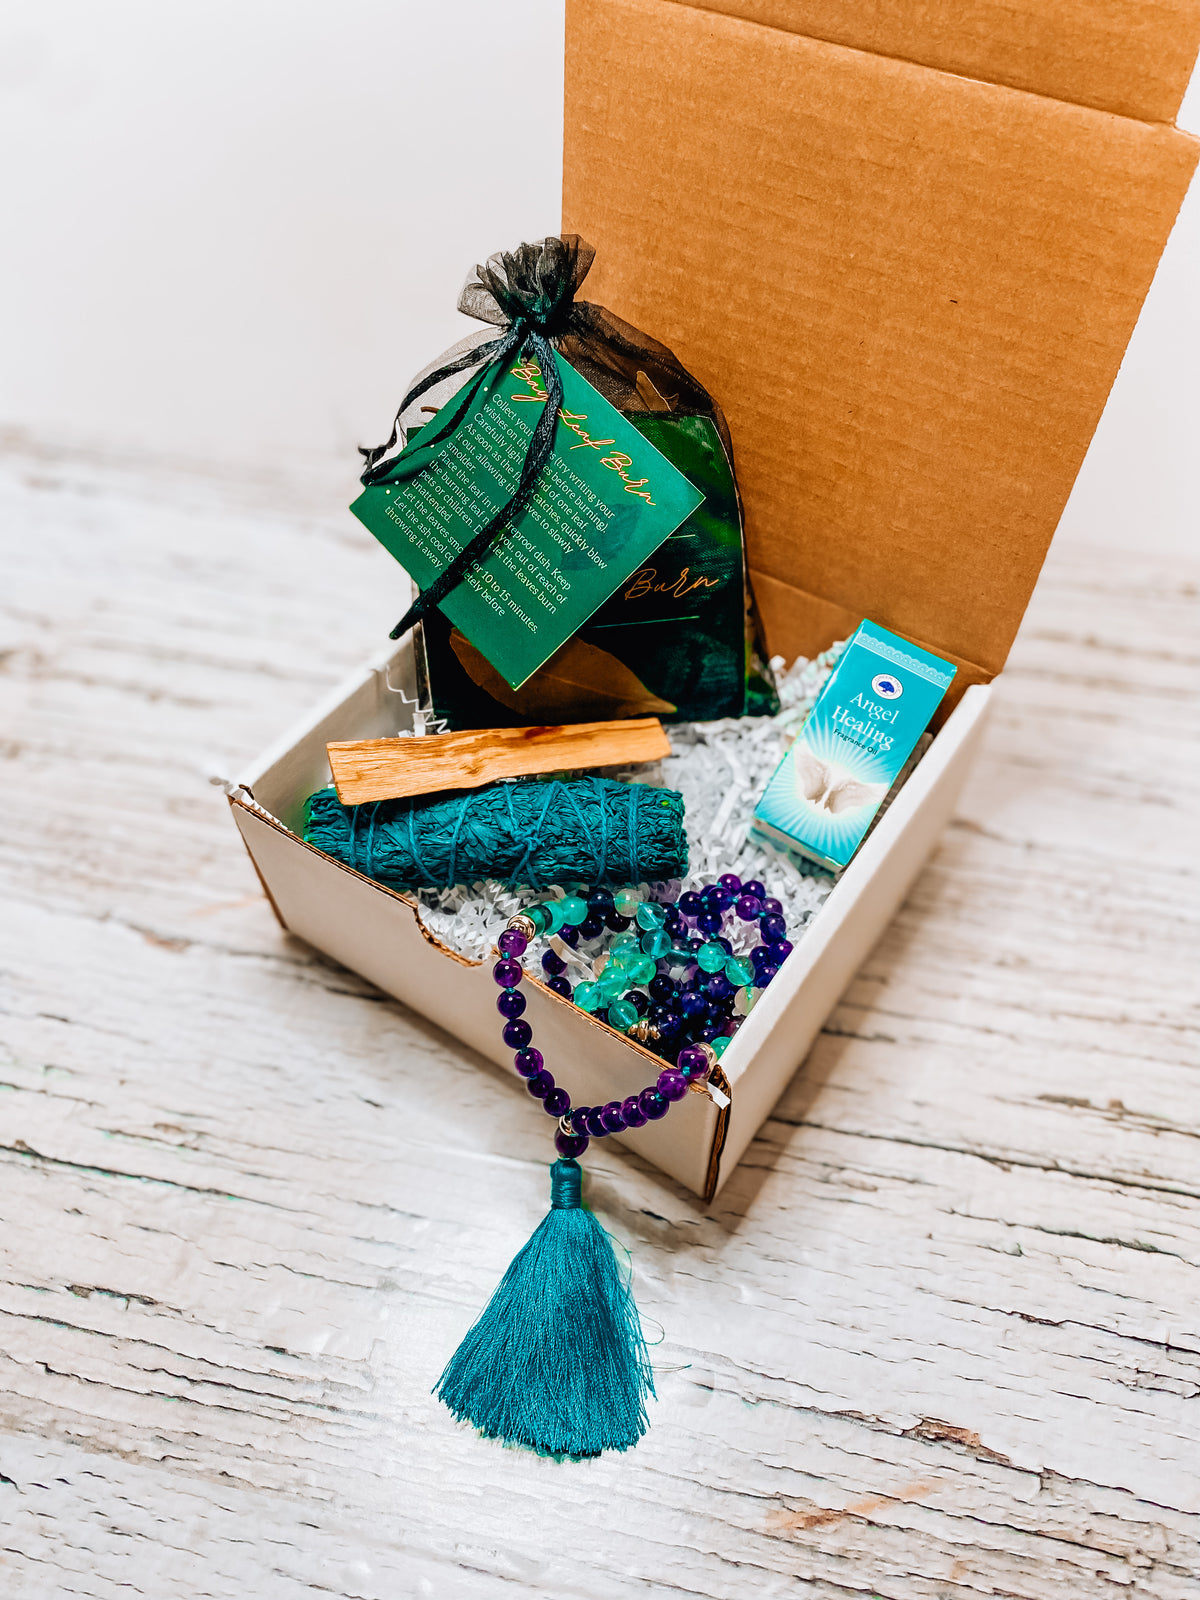 Higher Power Wellness Box  Spiritual Gift Box - Anxiety Gone